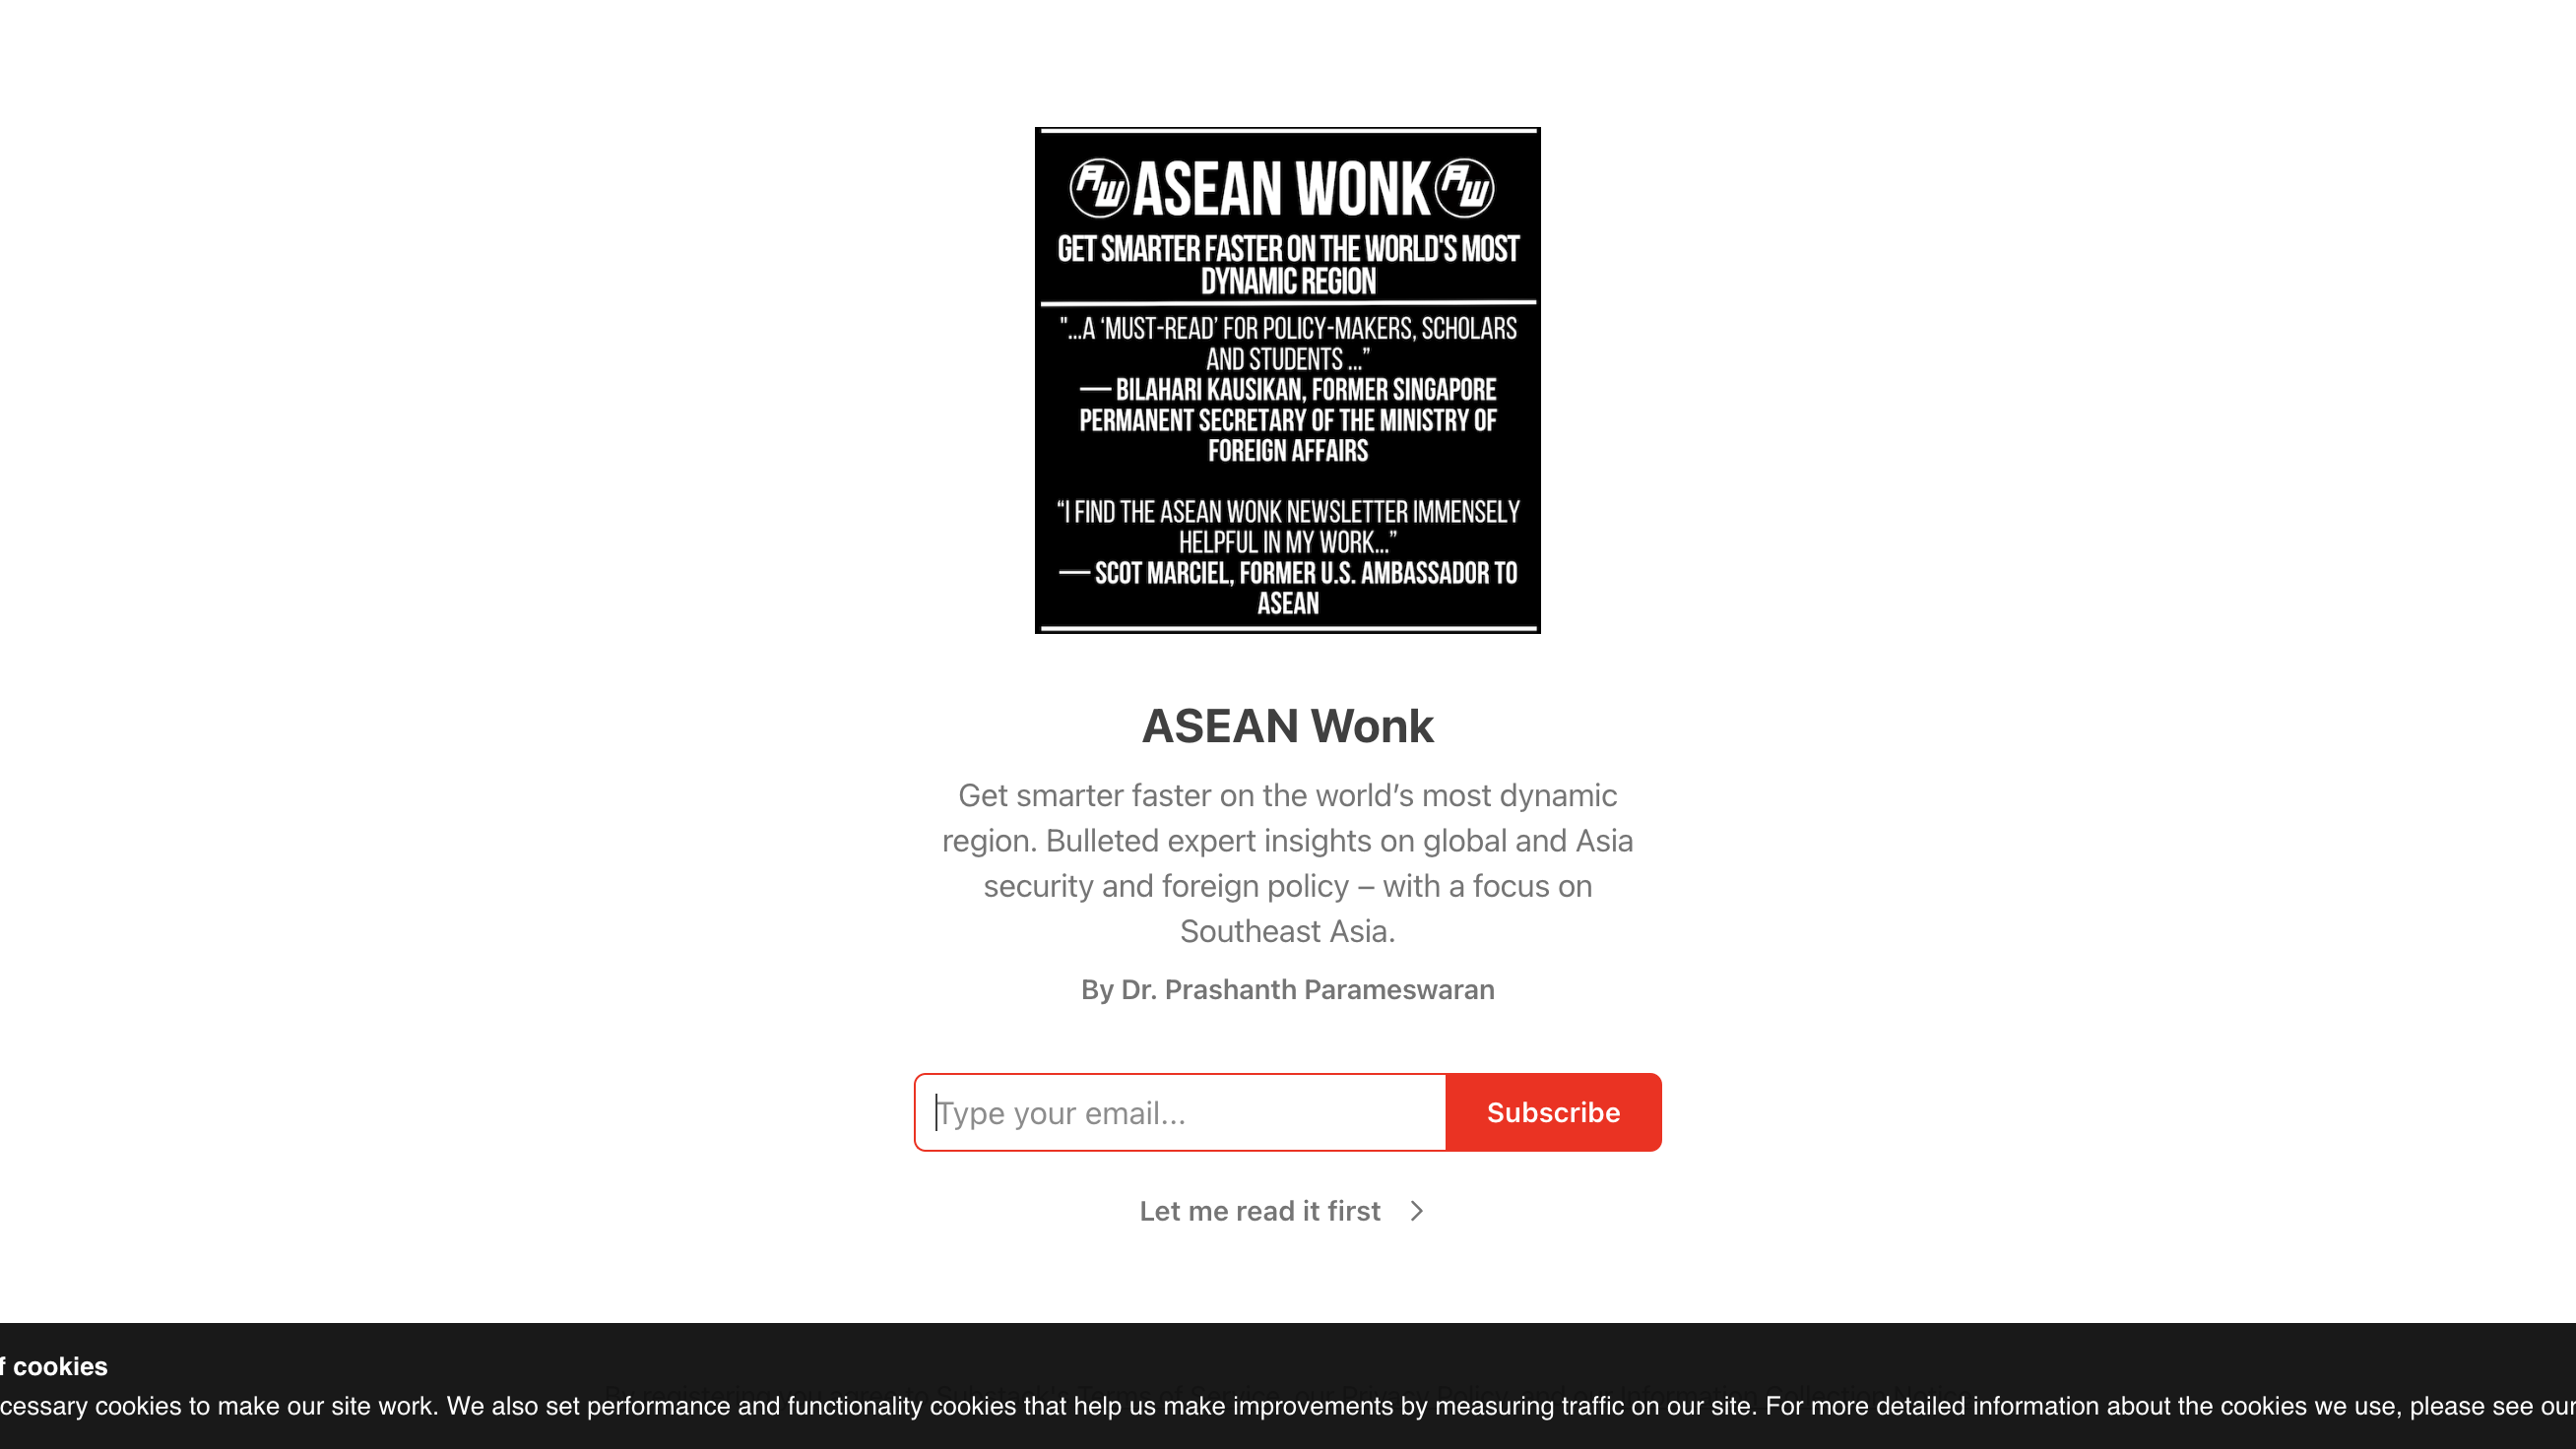 ASEAN Wonk homepage